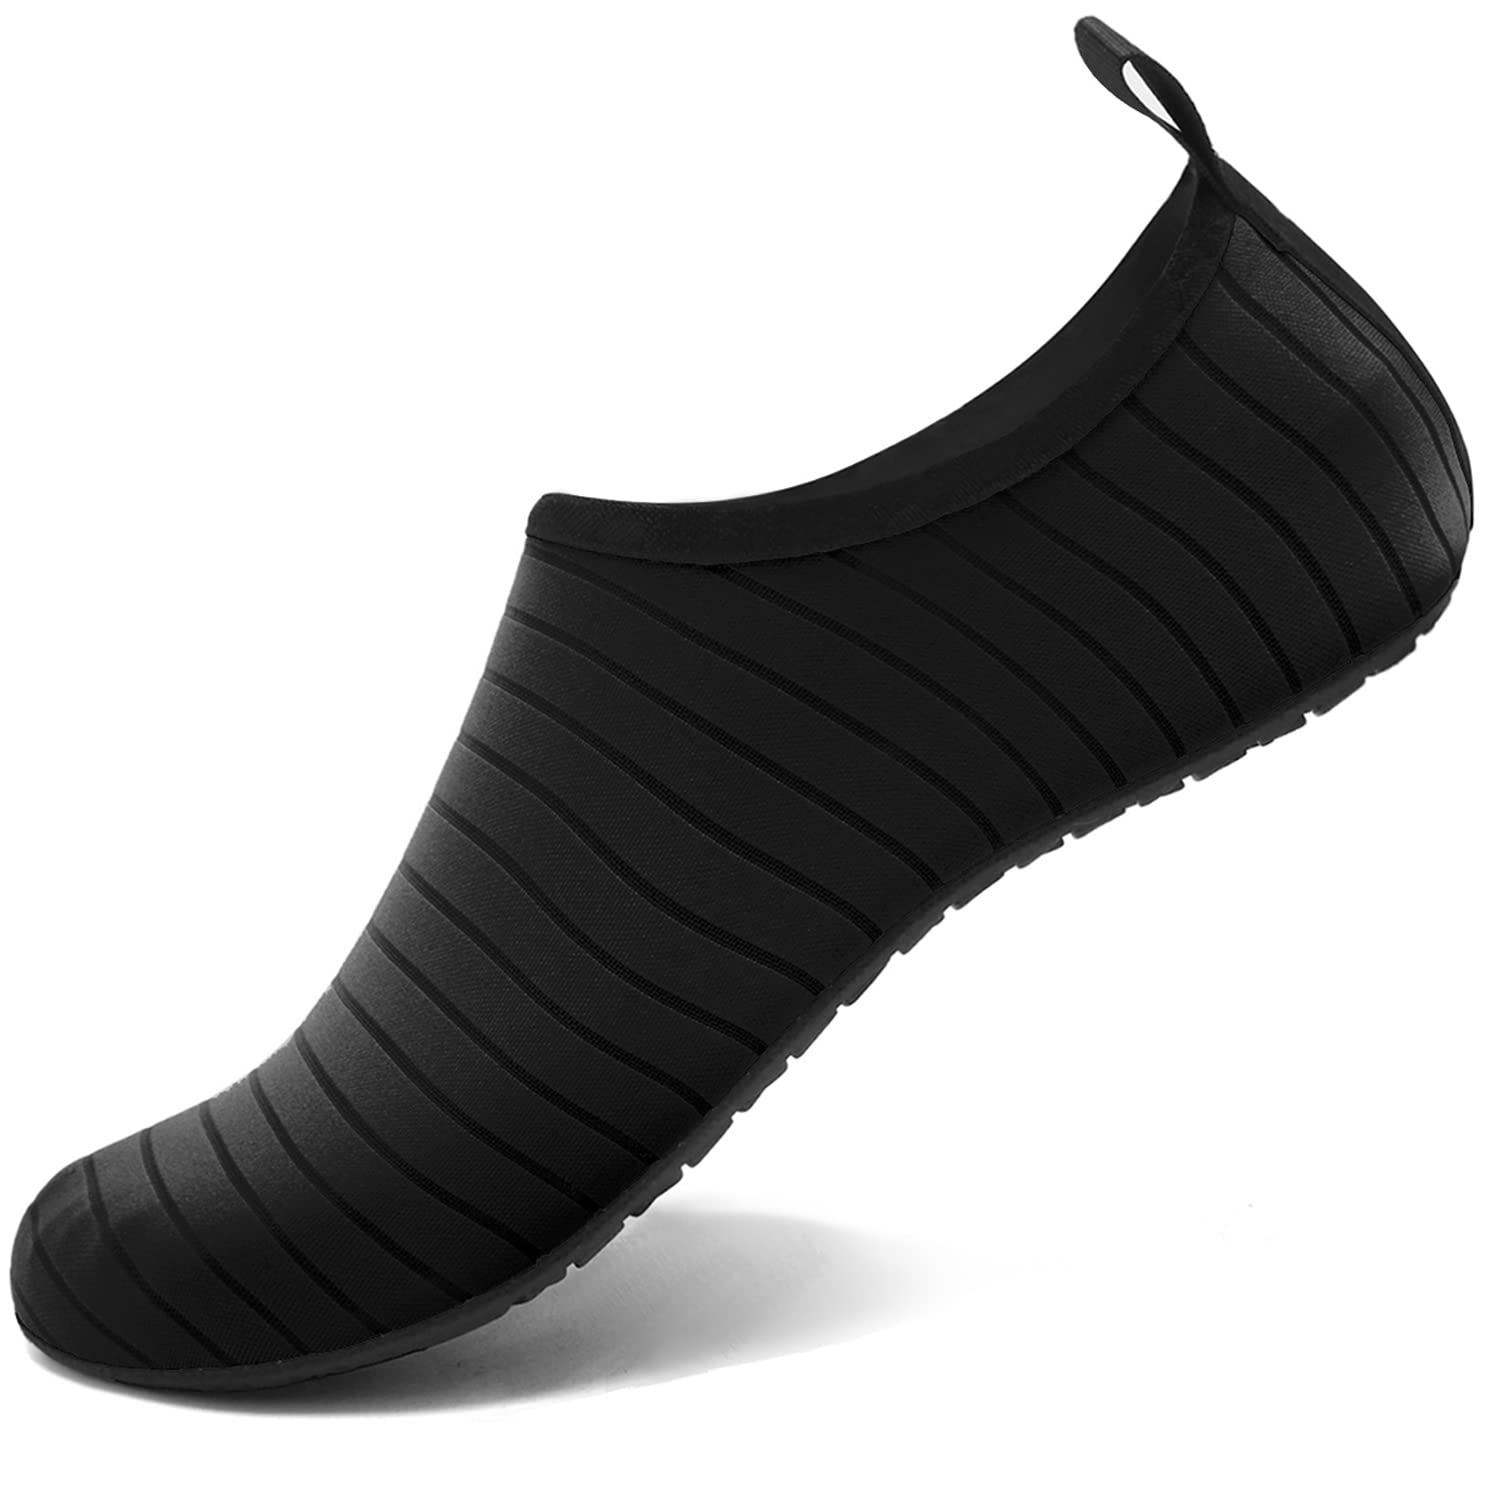 VIFUUR Water Sports Shoes Barefoot Quick-Dry Aqua Yoga Socks Slip-on for Men Women 7.5-8.5 Women/6-7 Men Black